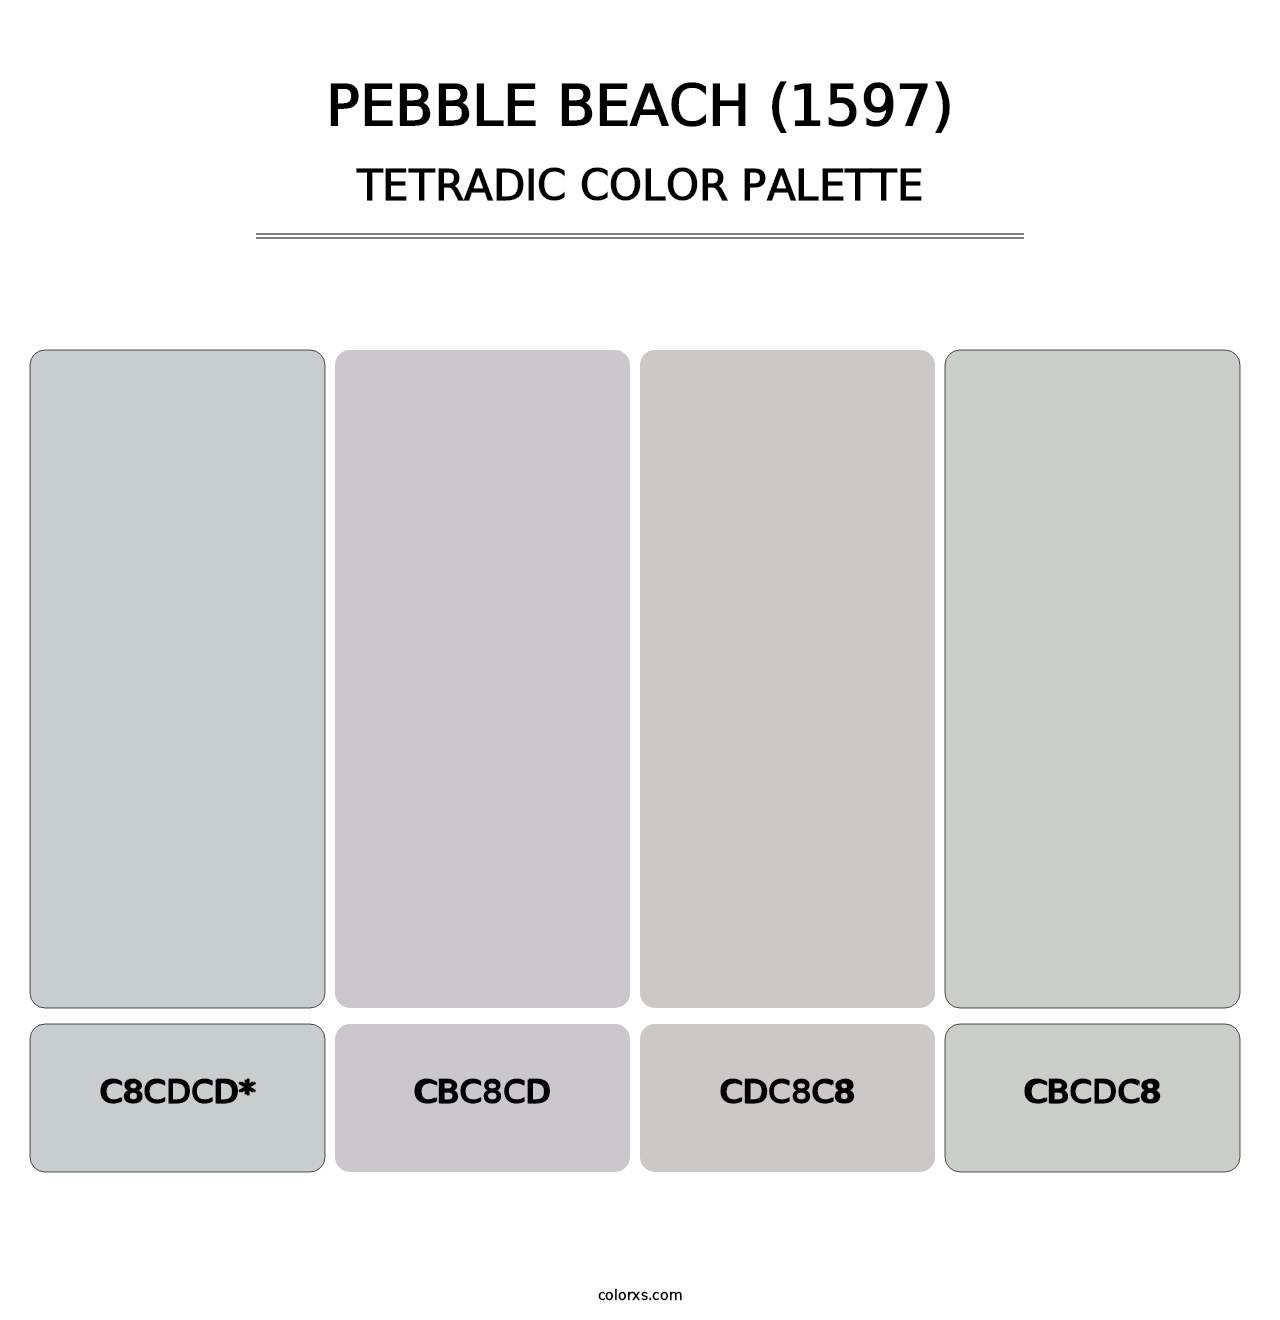 Pebble Beach (1597) - Tetradic Color Palette